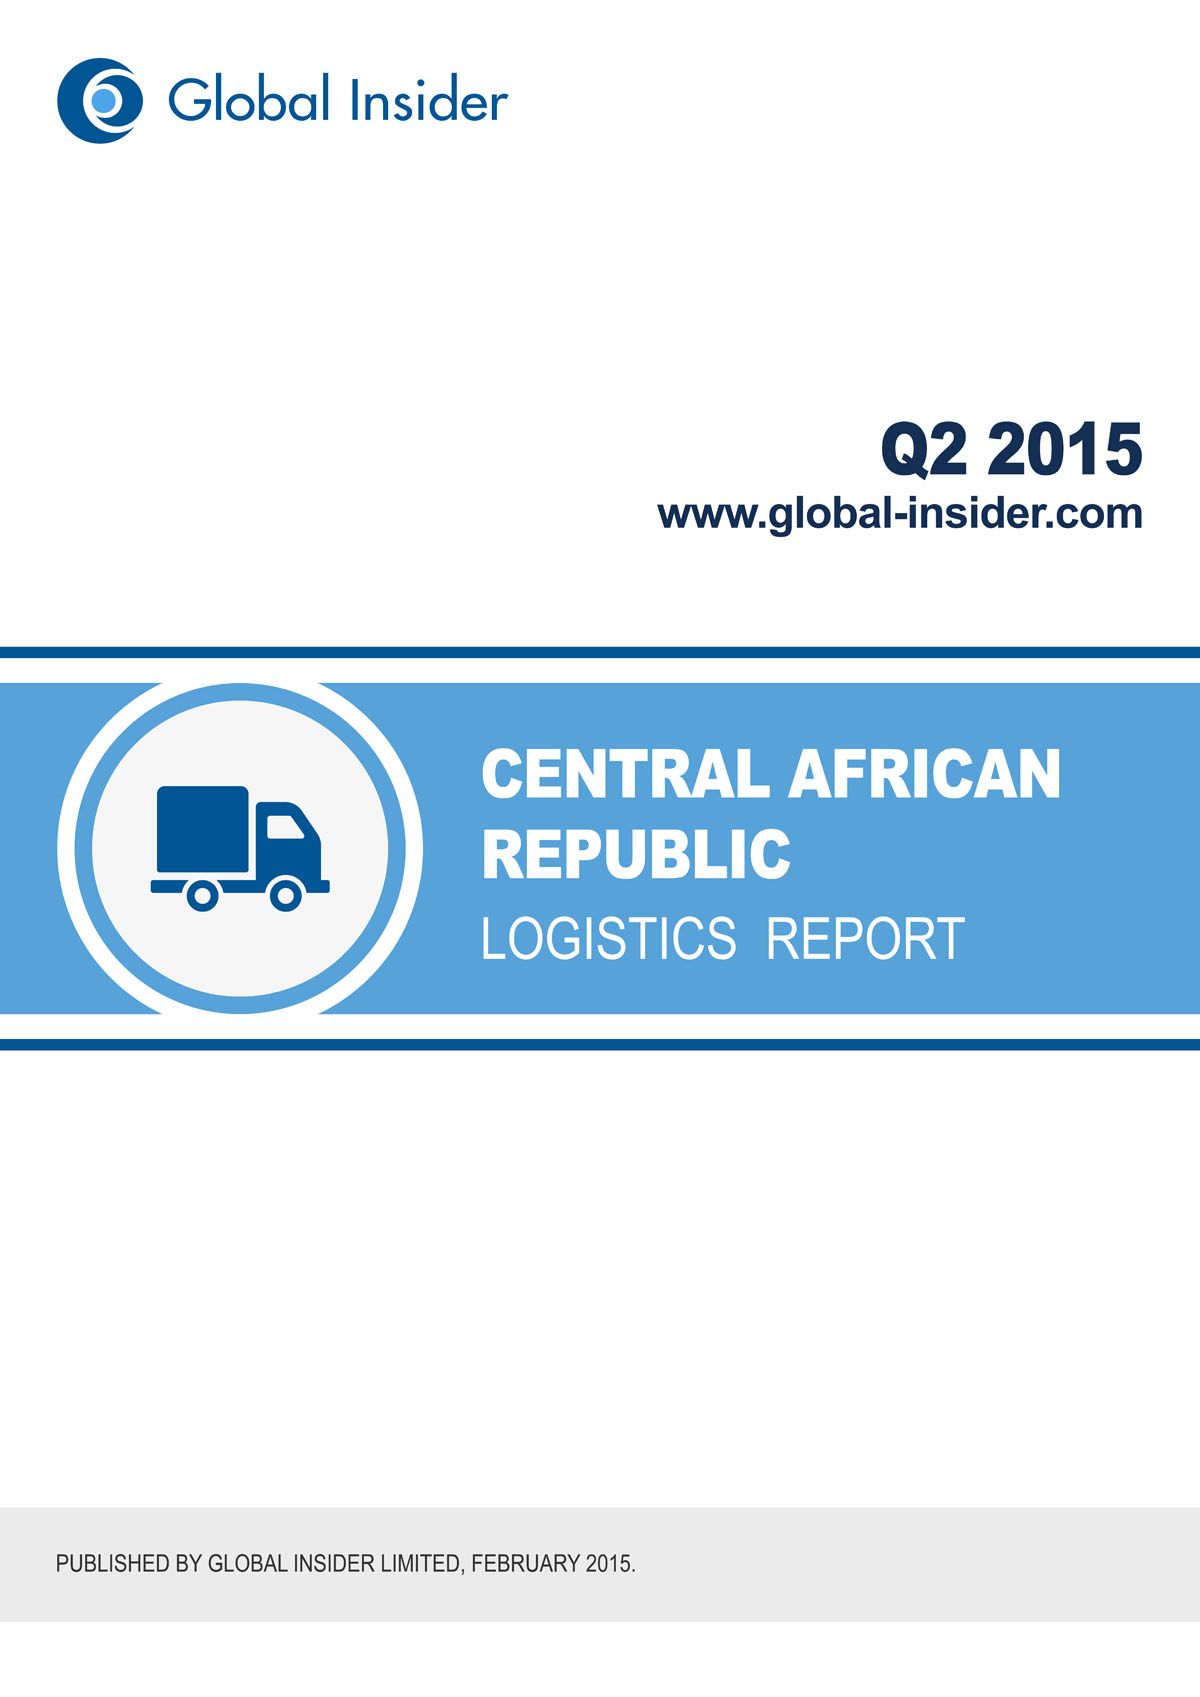 Central African Republic Logistics Report